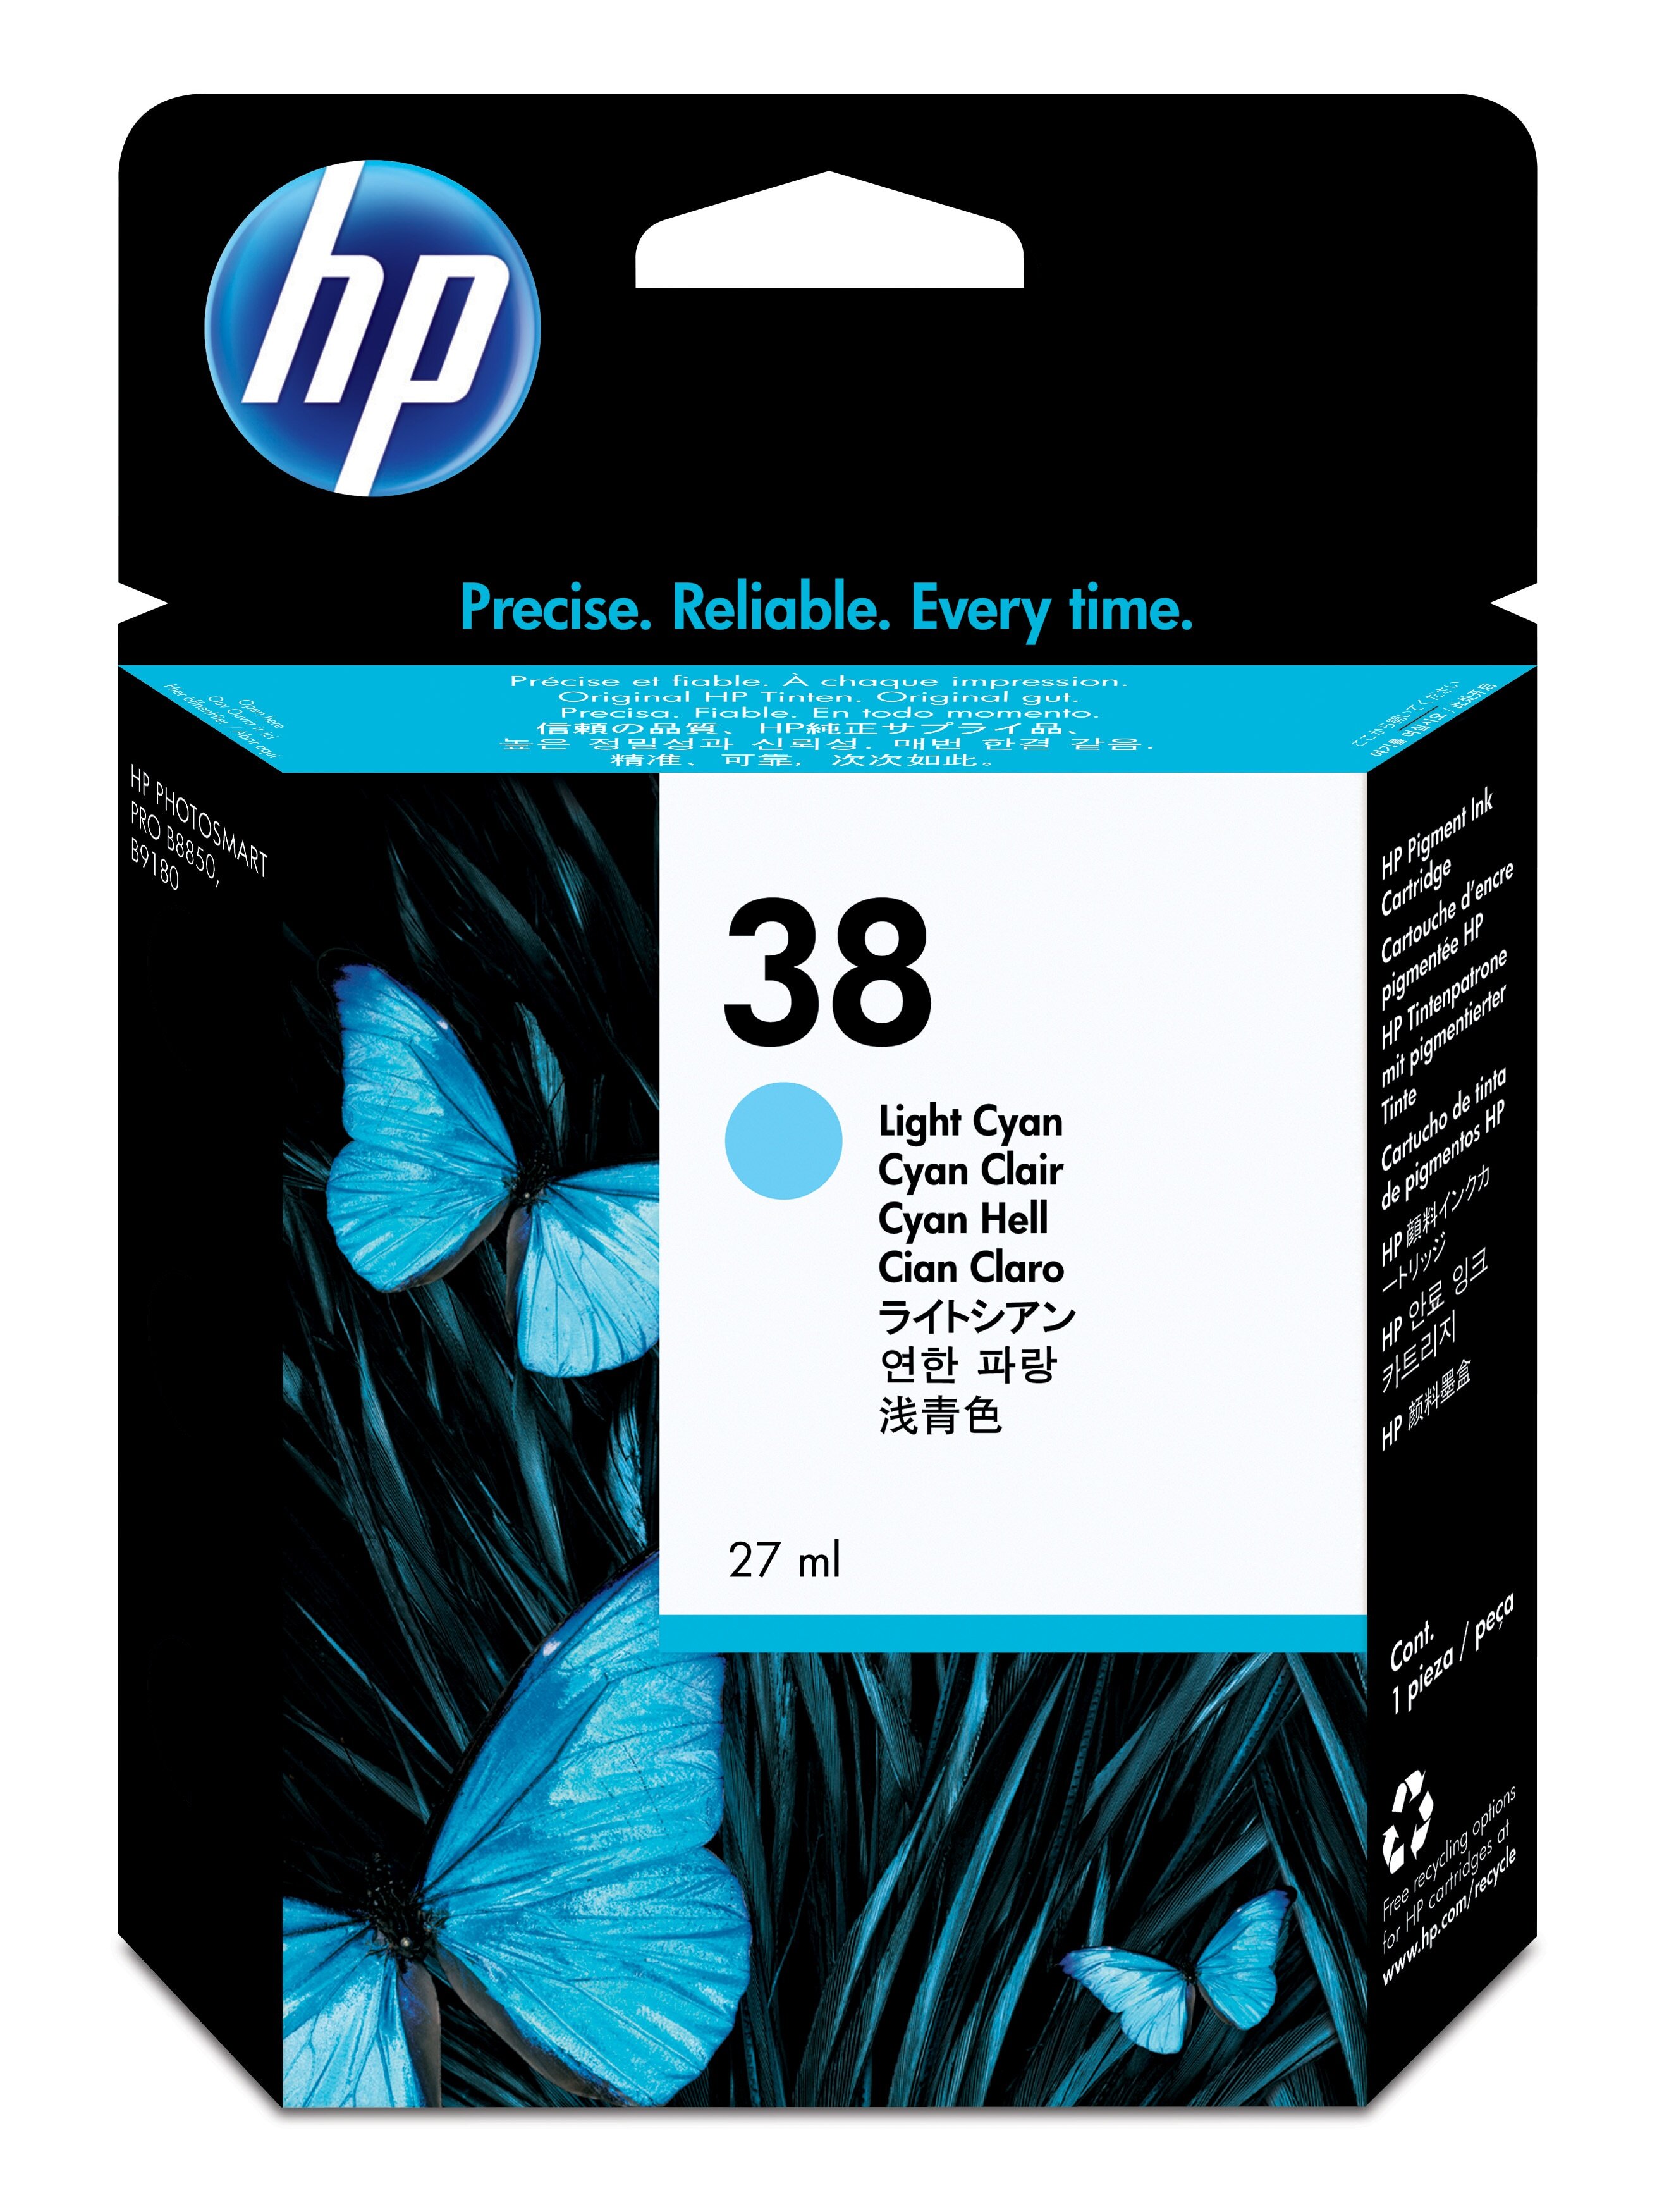 HP 38 single pack / Lichtyaan